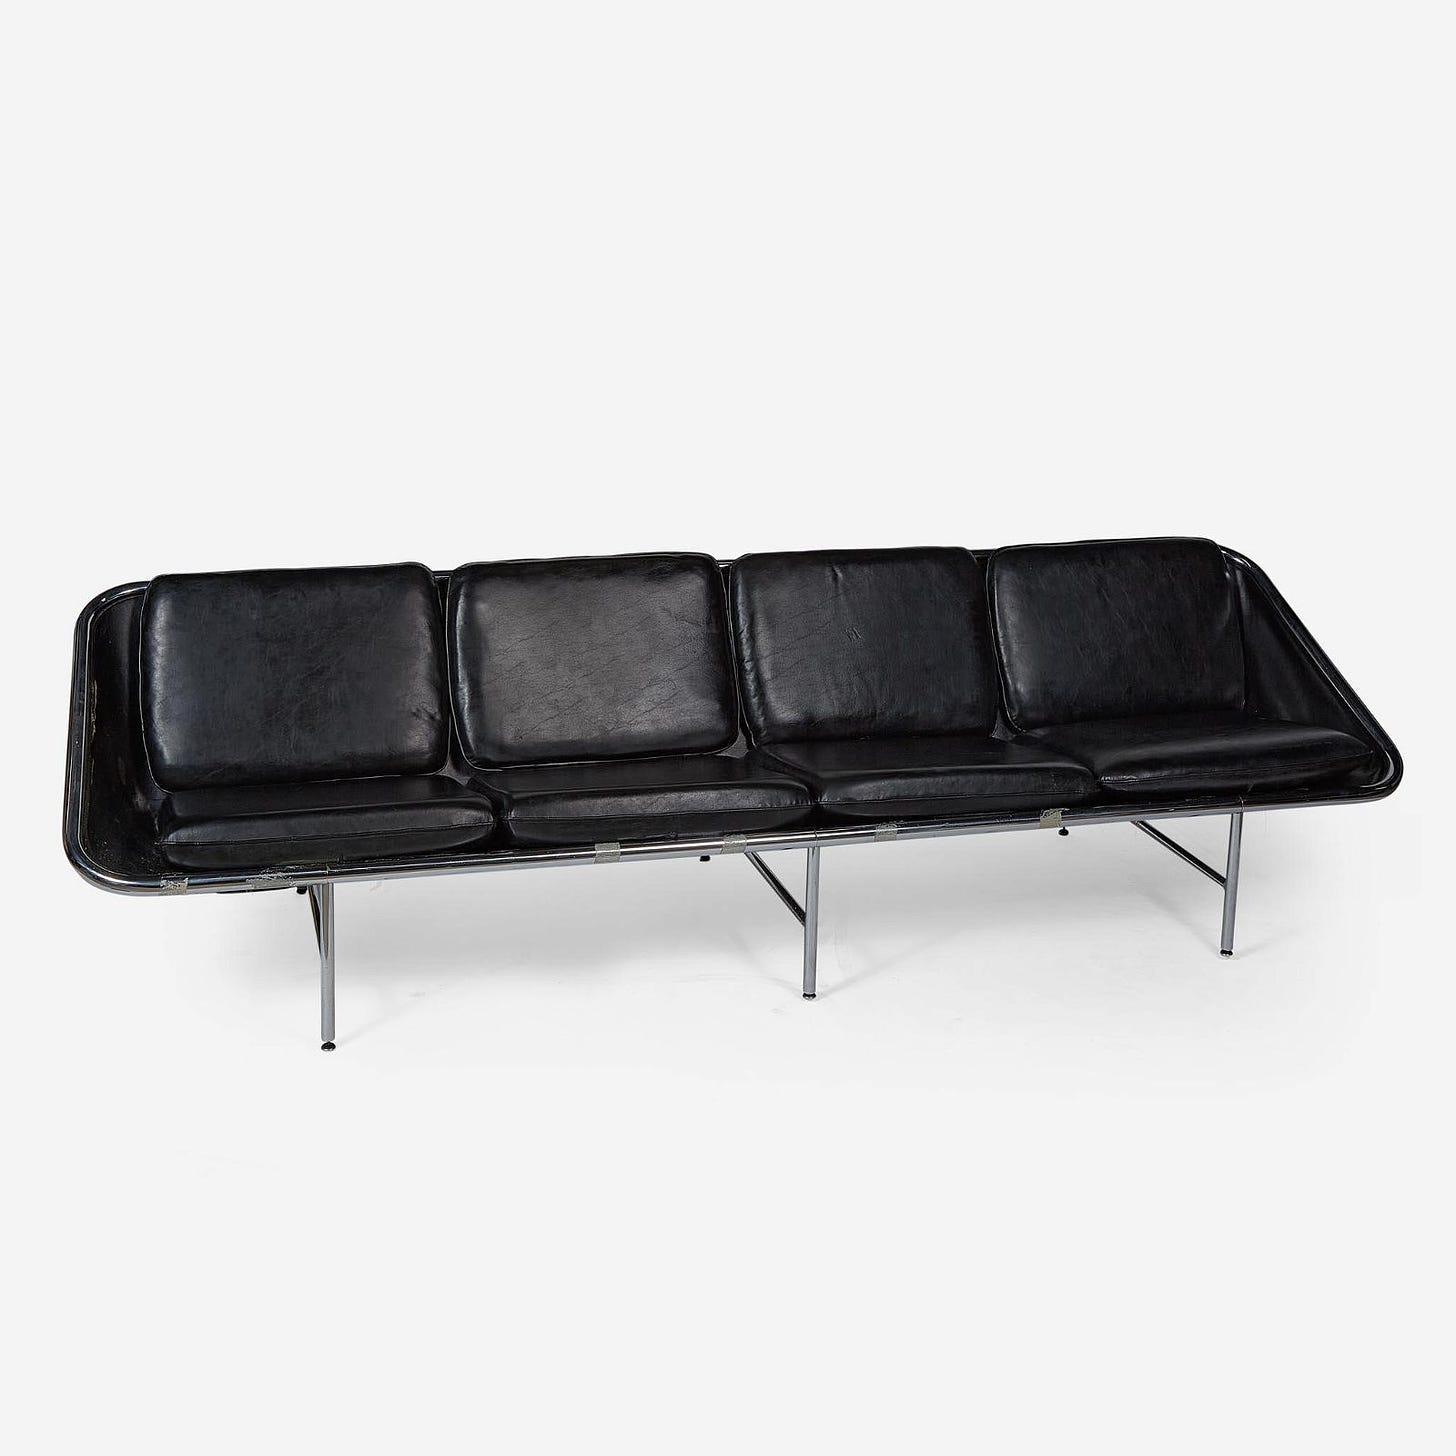 George Nelson (American, 1908-1986) Four-Seat "Sling" Sofa, Model 6833, Herman Miller, USA, 1963